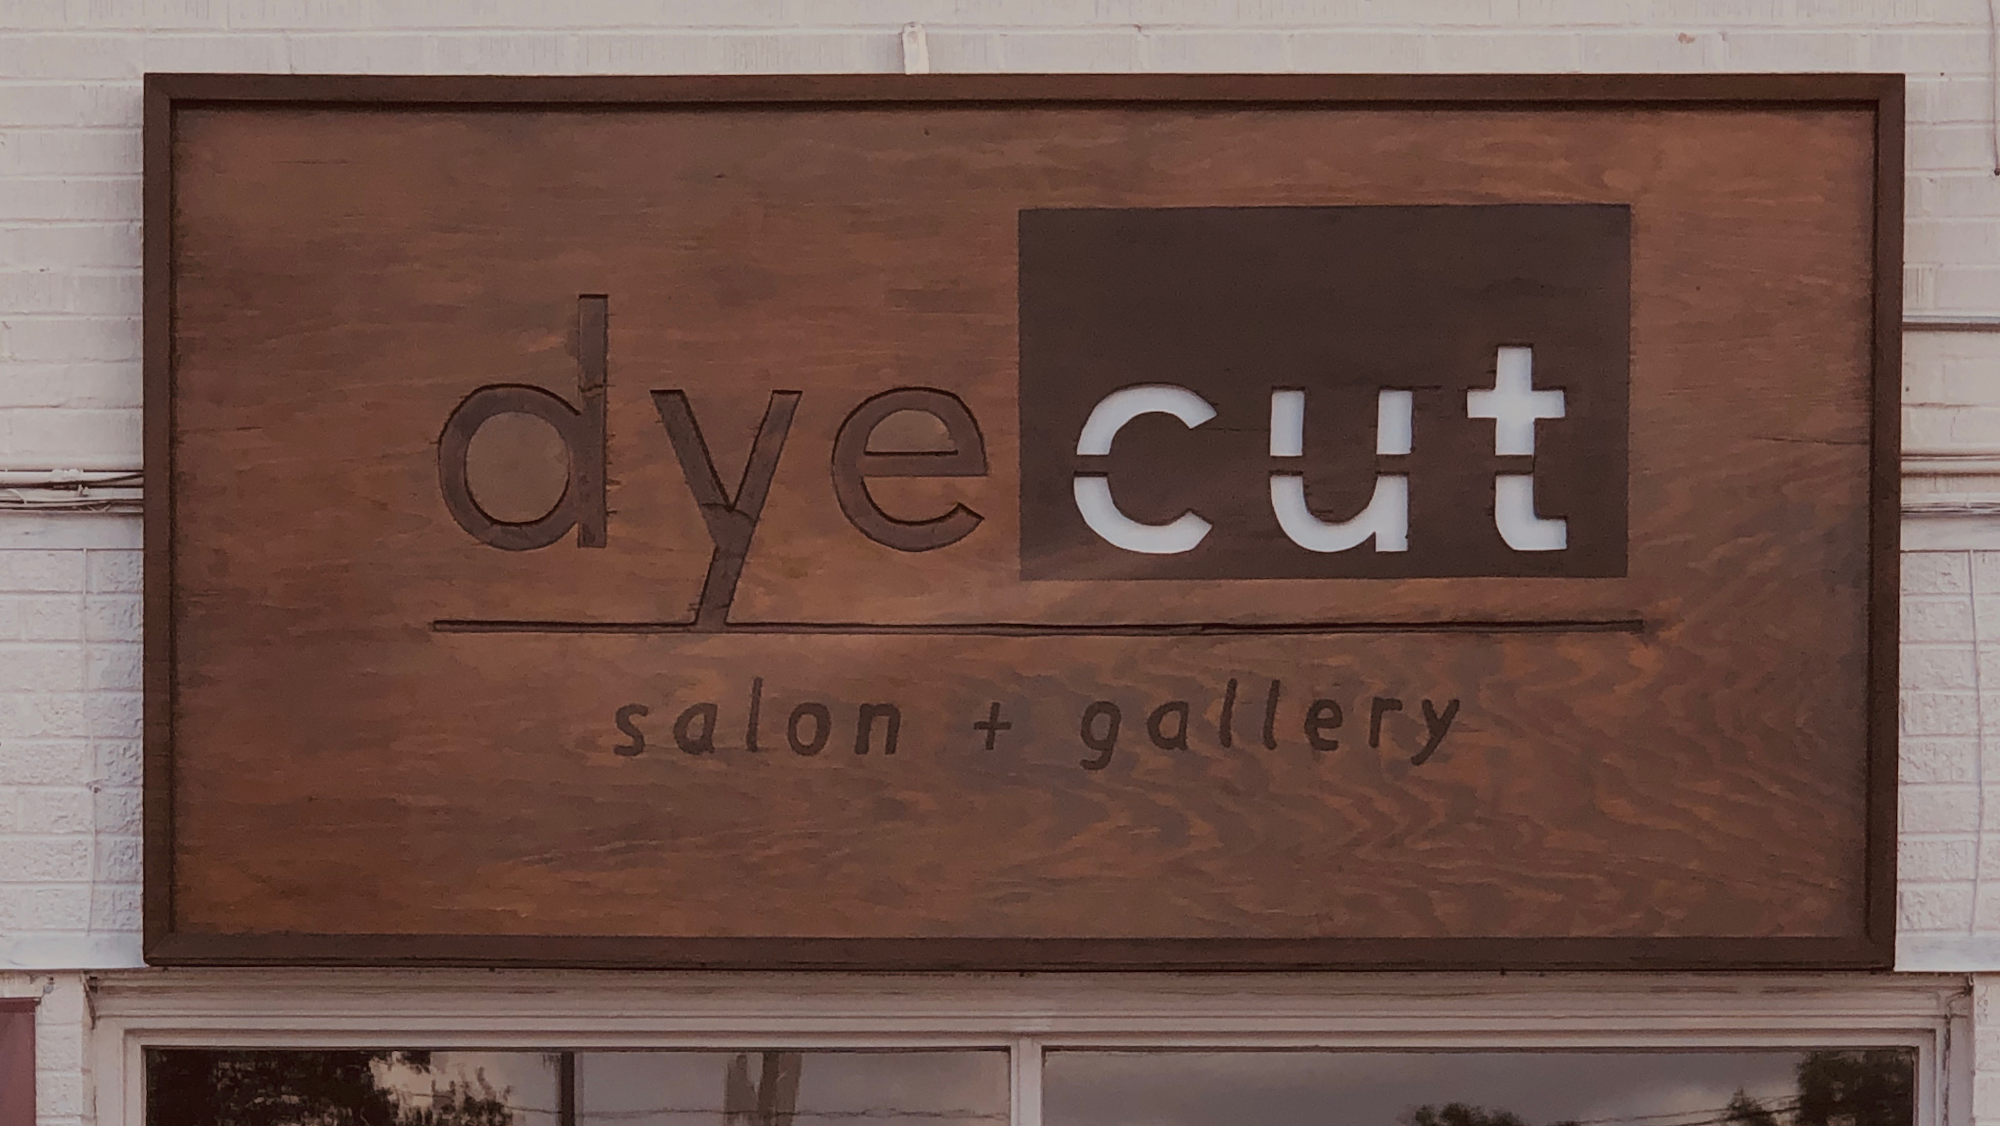 Dyecut Salon & Gallery